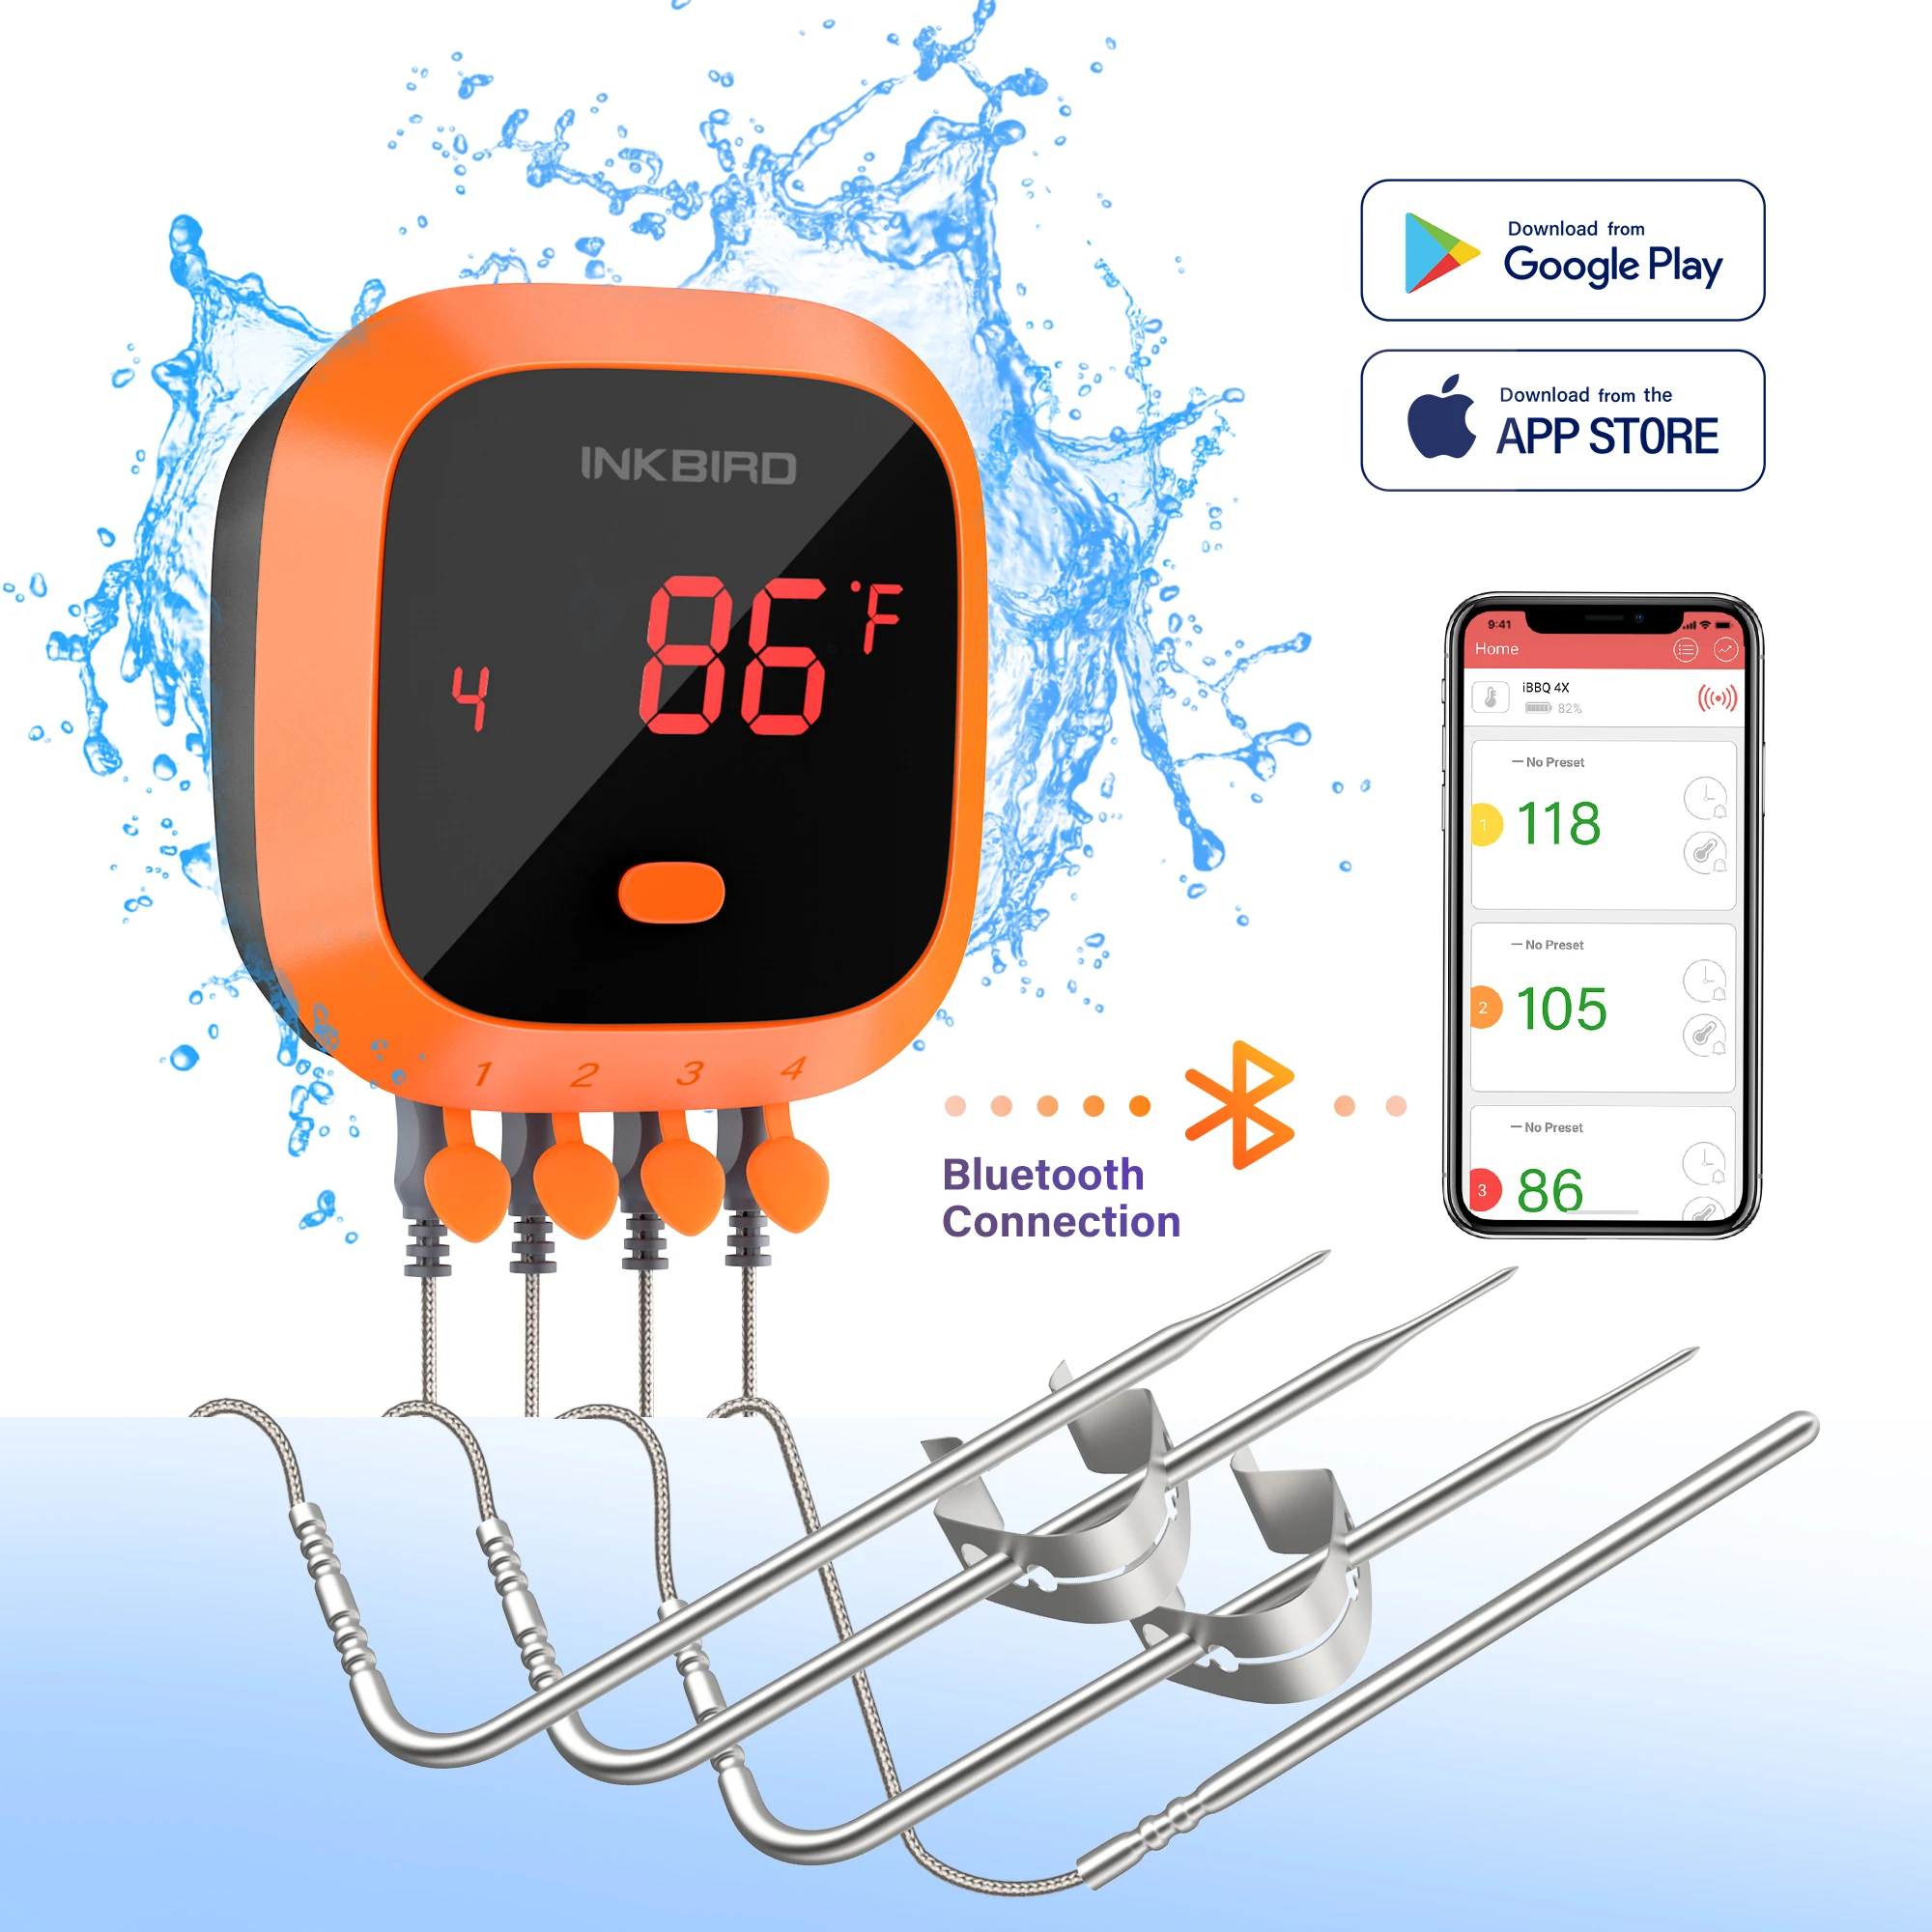 

Inkbird IBT-4XC wireless outdoor Bluetooth digital meat thermometer waterproof magnetic design, Orange